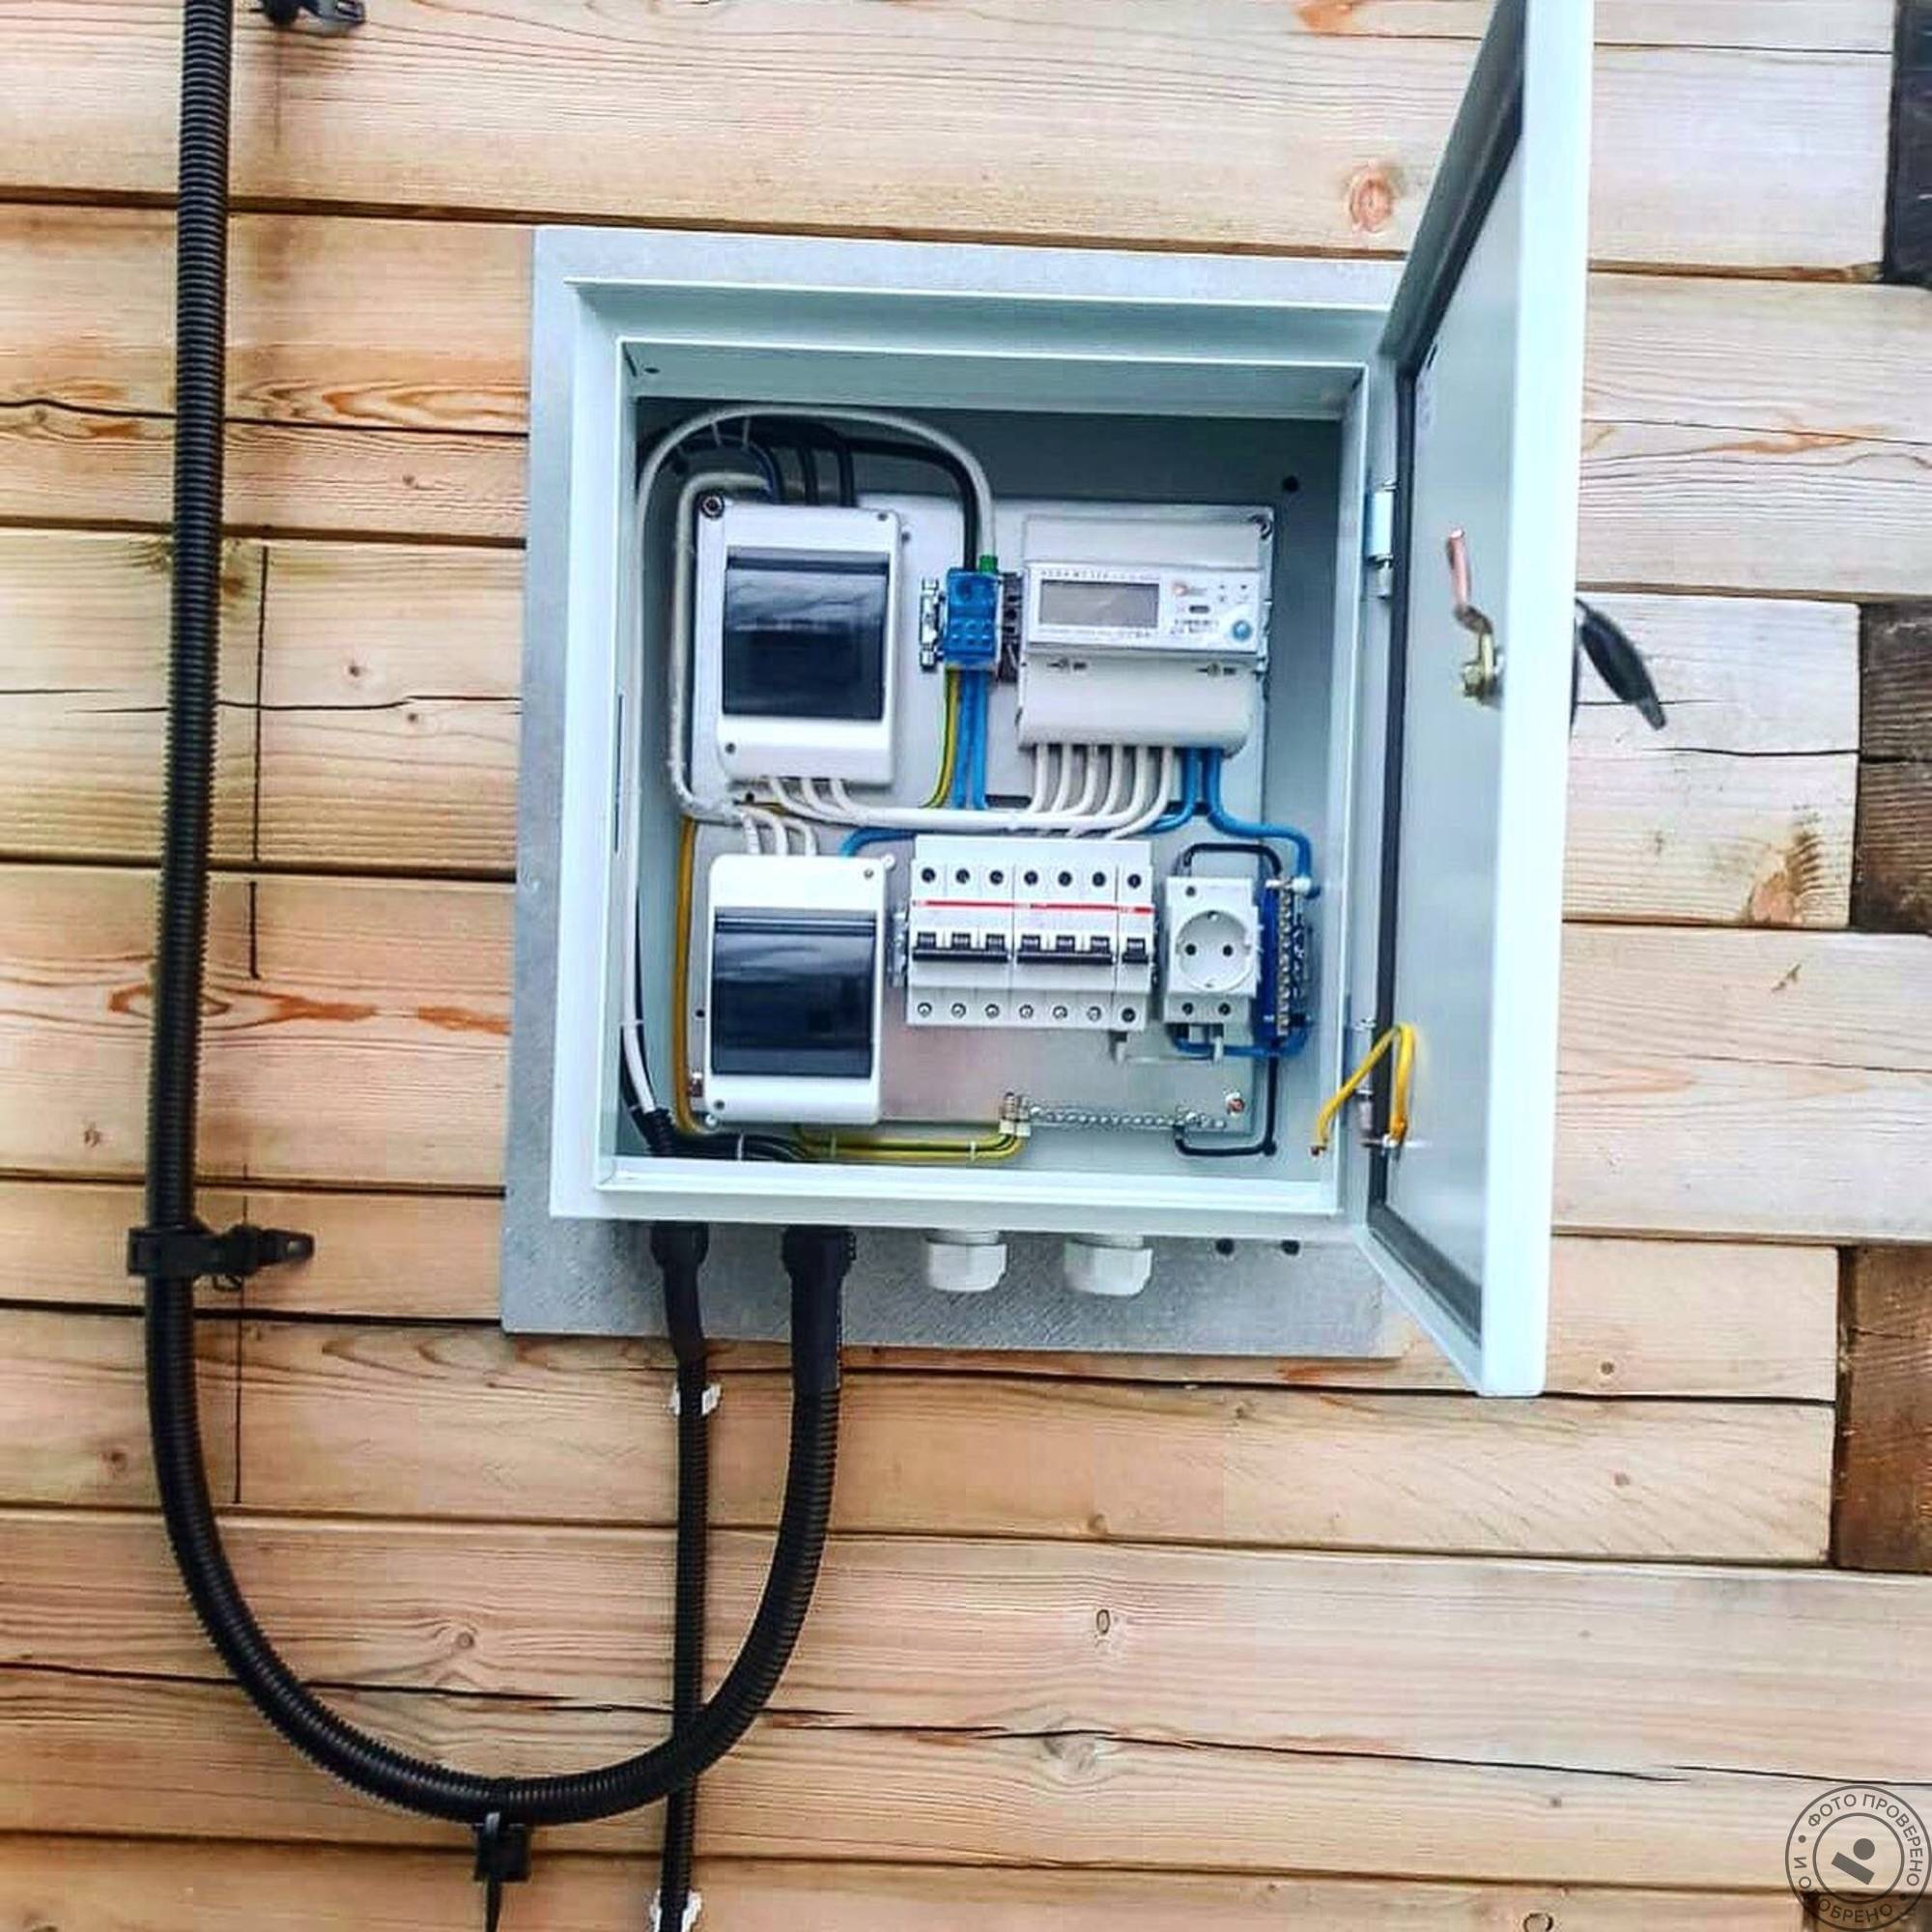 Установка электросчетчика в частном доме на улице (фото, видео)